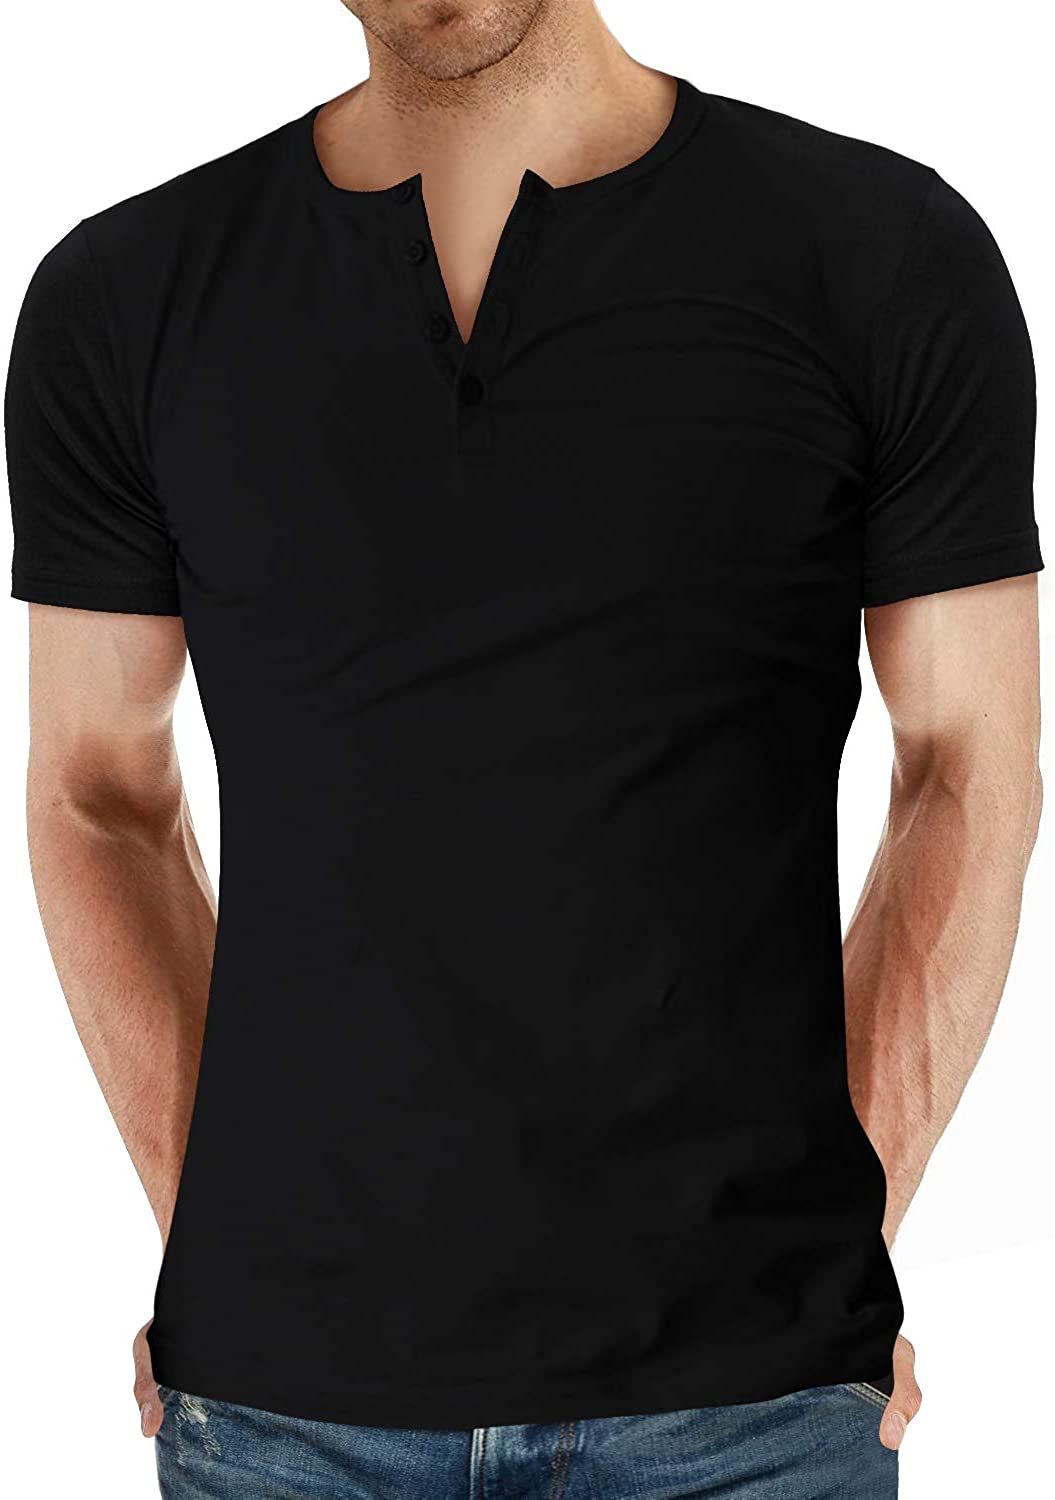 YTD Mens Casual Slim Fit Short Sleeve Henley T-Shirts Cotton Shirts